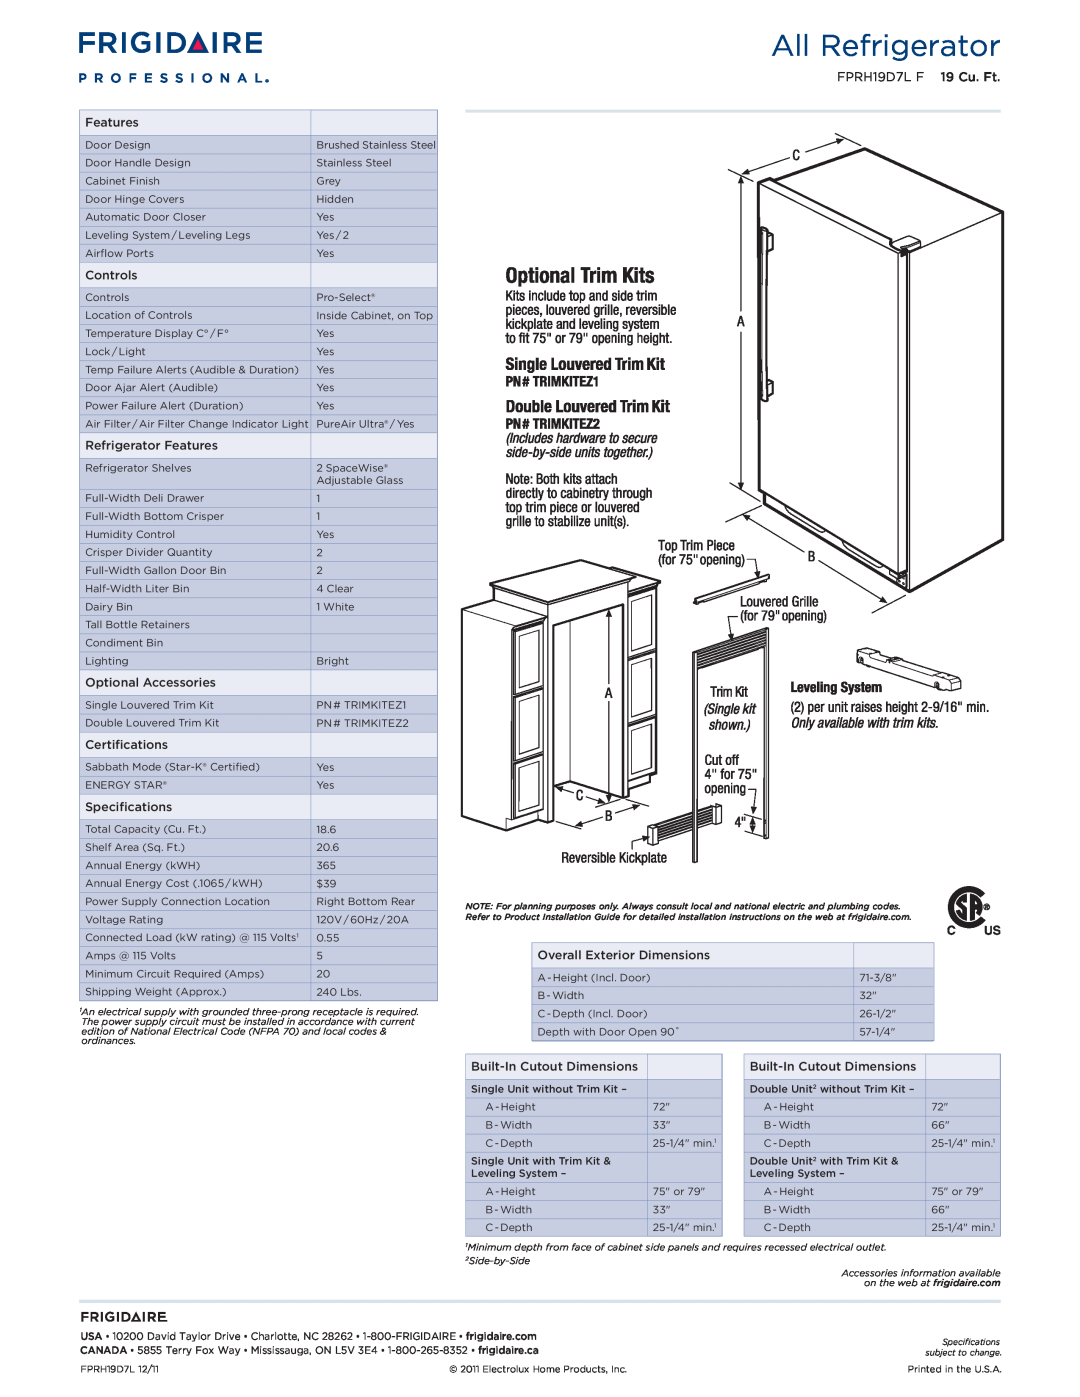 Frigidaire dimensions All Refrigerator, FPRH19D7L F 19 Cu. Ft 